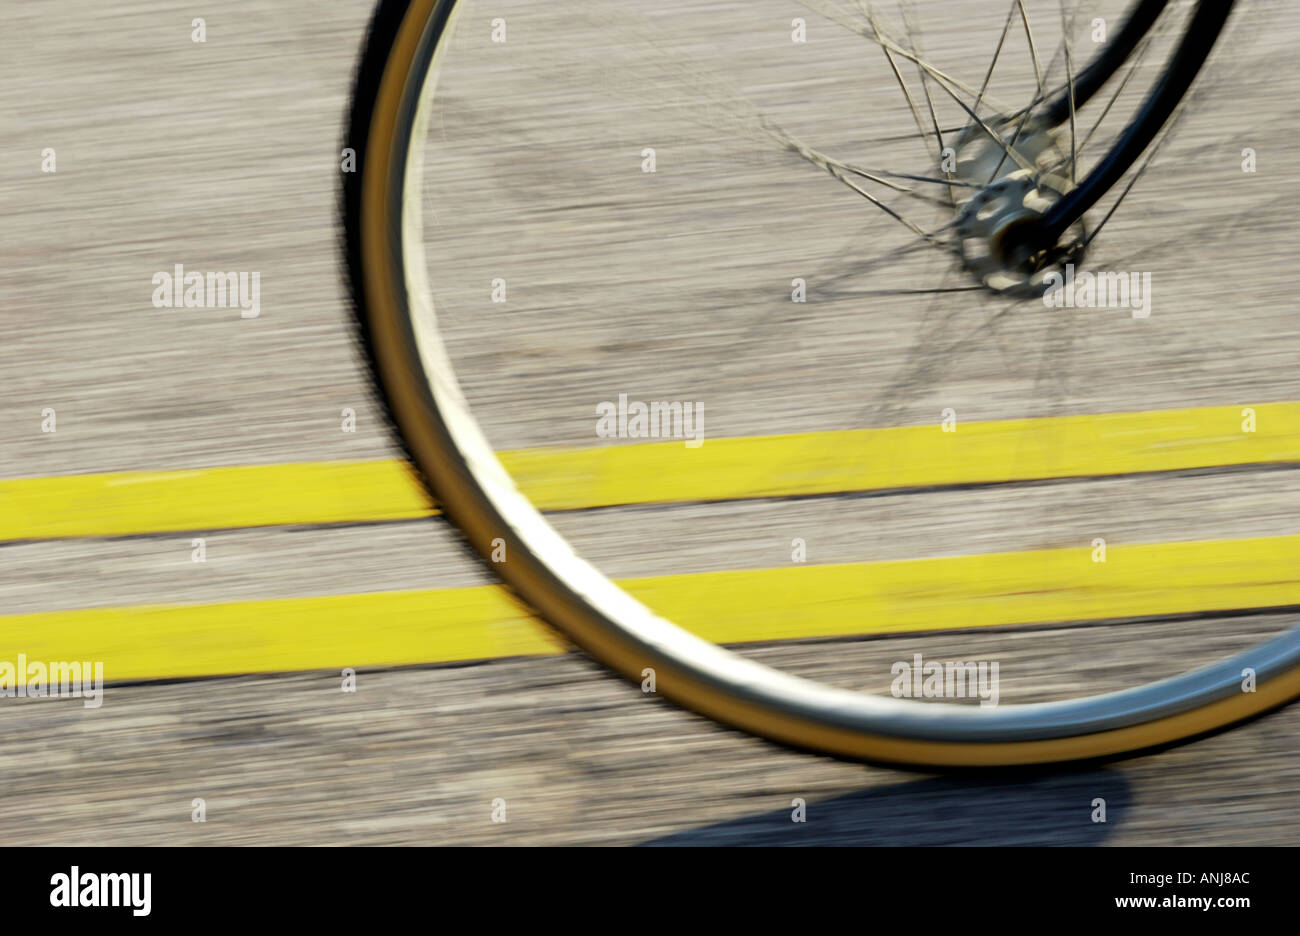 wheel of racing bicycle on track Stock Photo